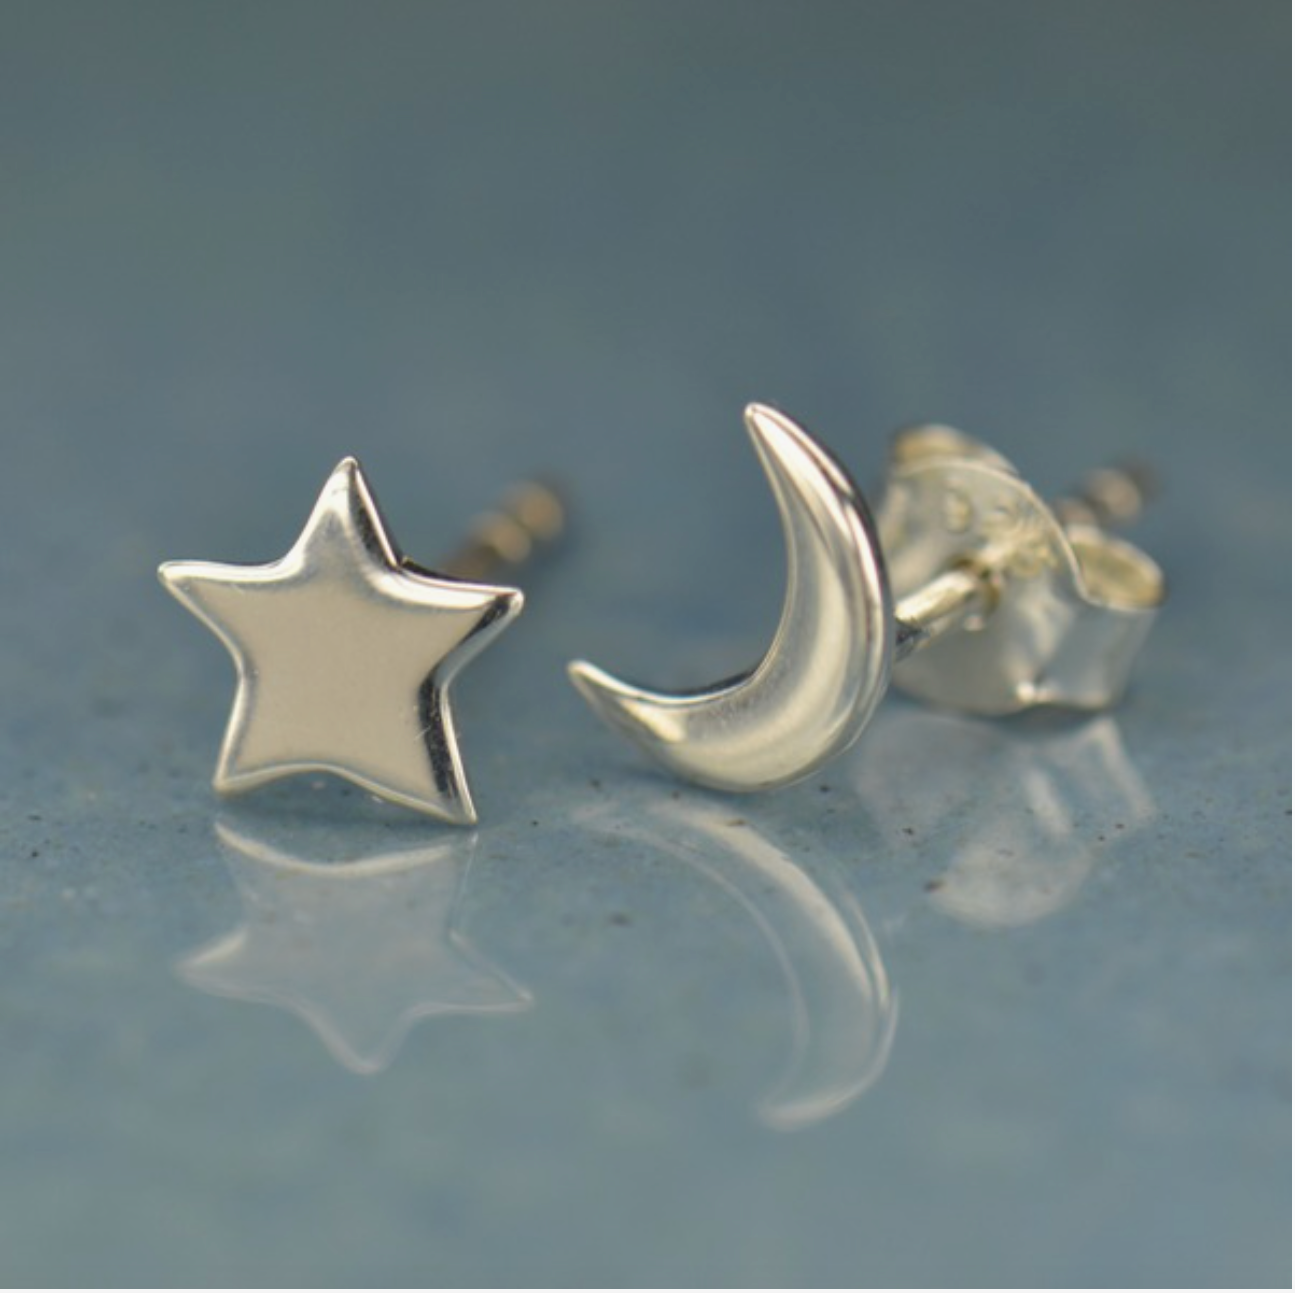 Star and Moon Stud Earrings